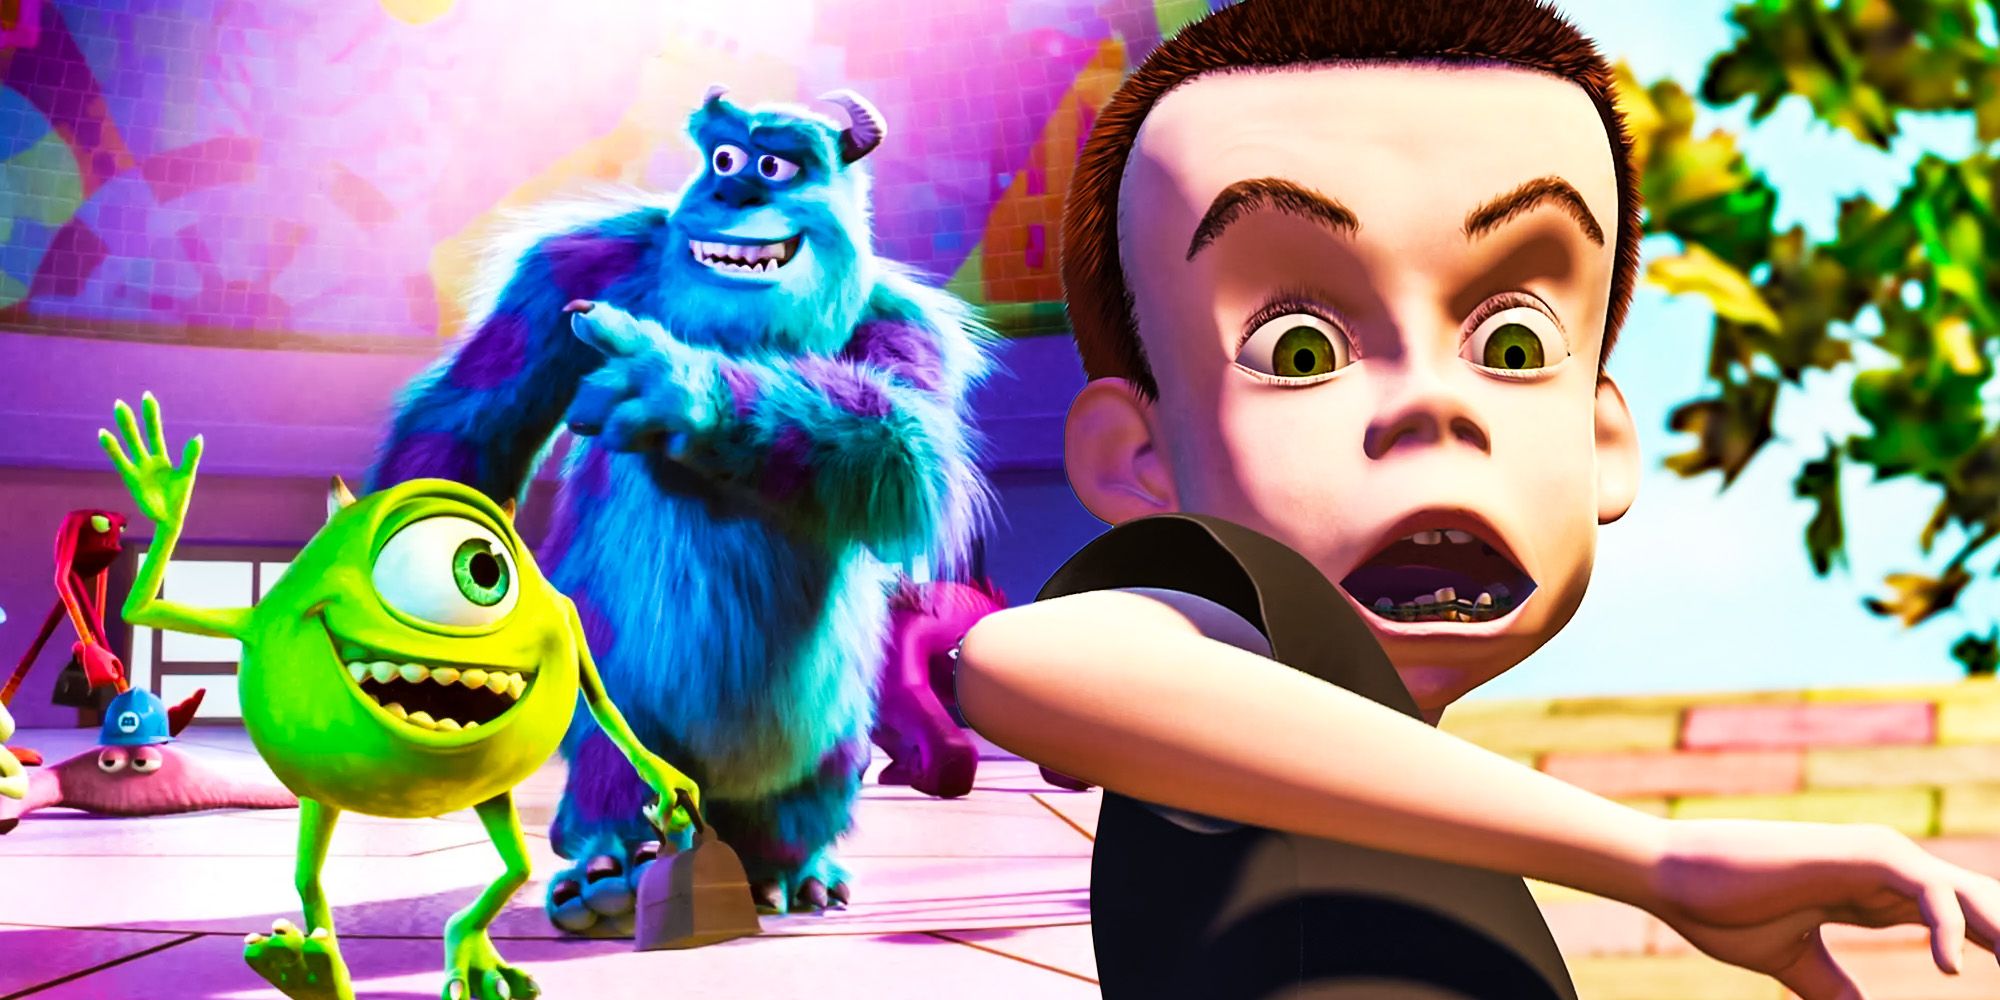 Genius Toy Story Theory Reveals A Big Pixar Crossover